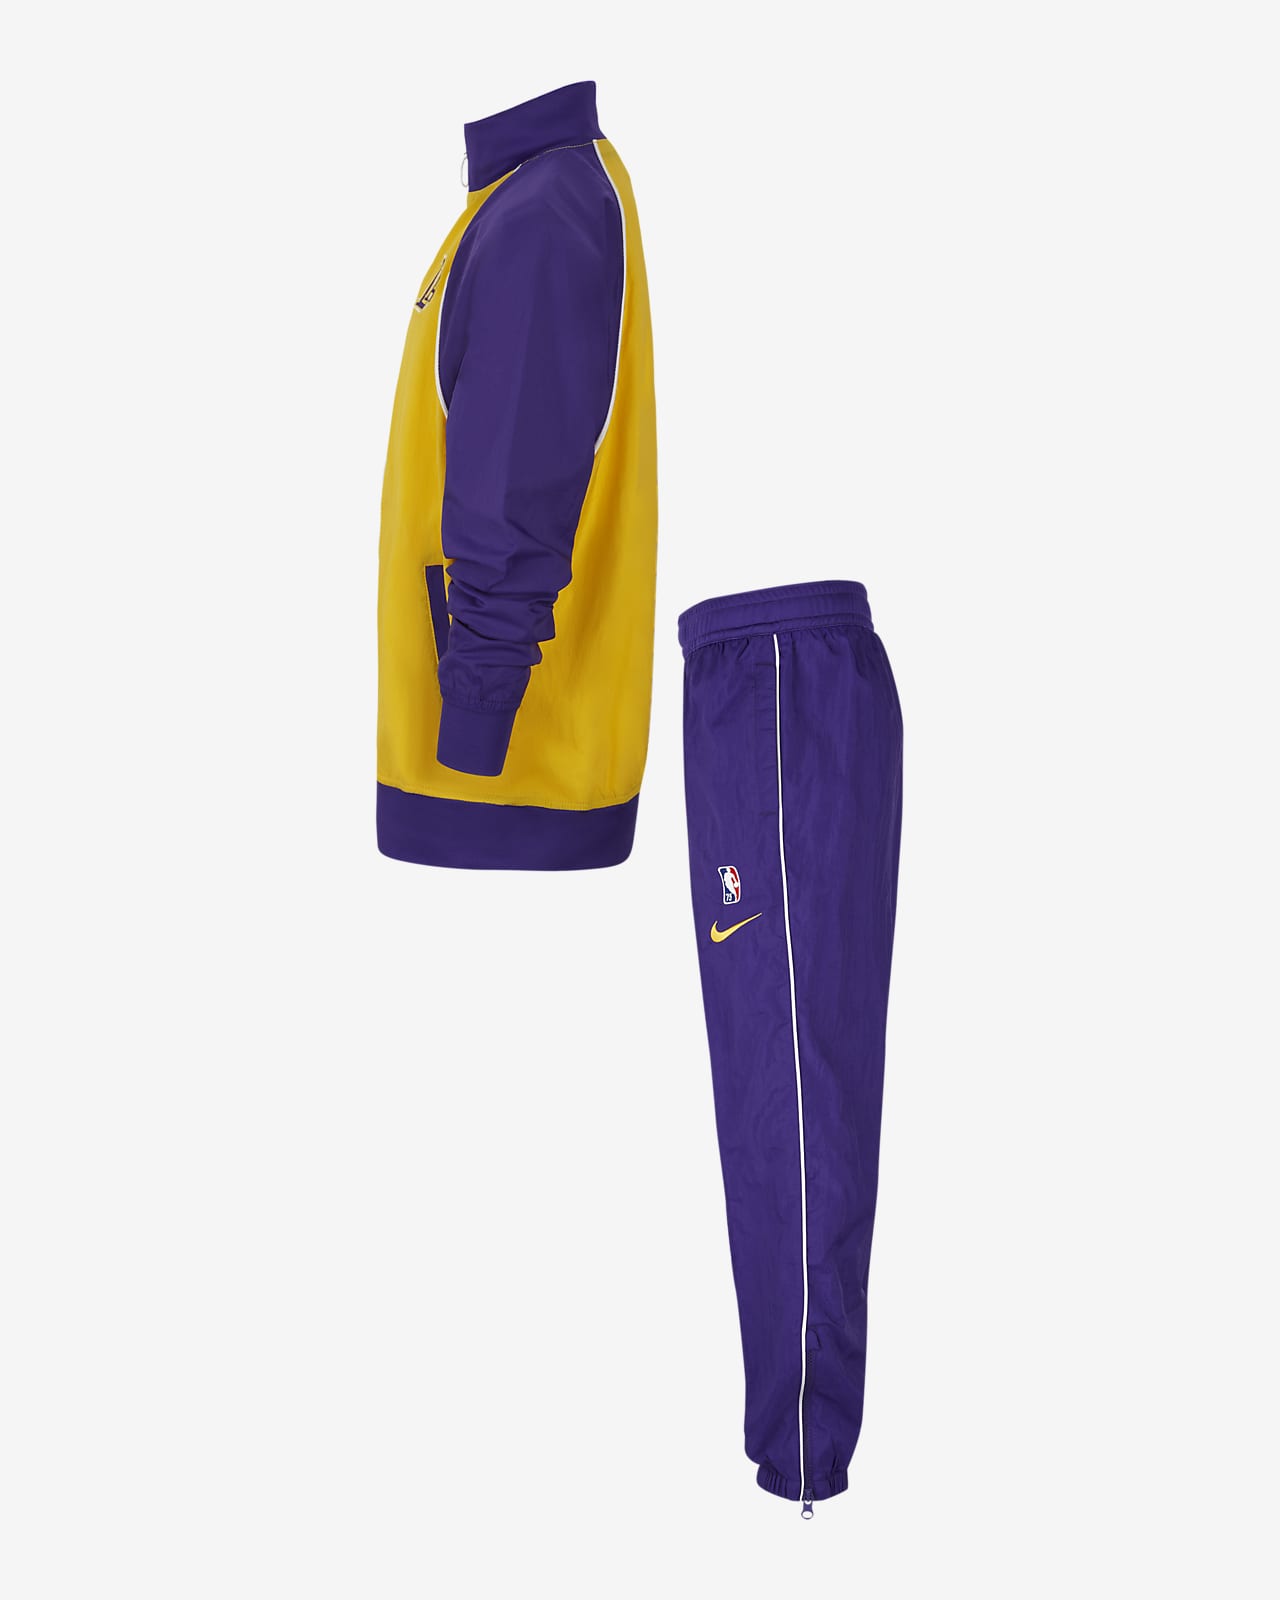 viceversa corazón ex Los Angeles Lakers Courtside Chándal Nike NBA - Niño/a. Nike ES